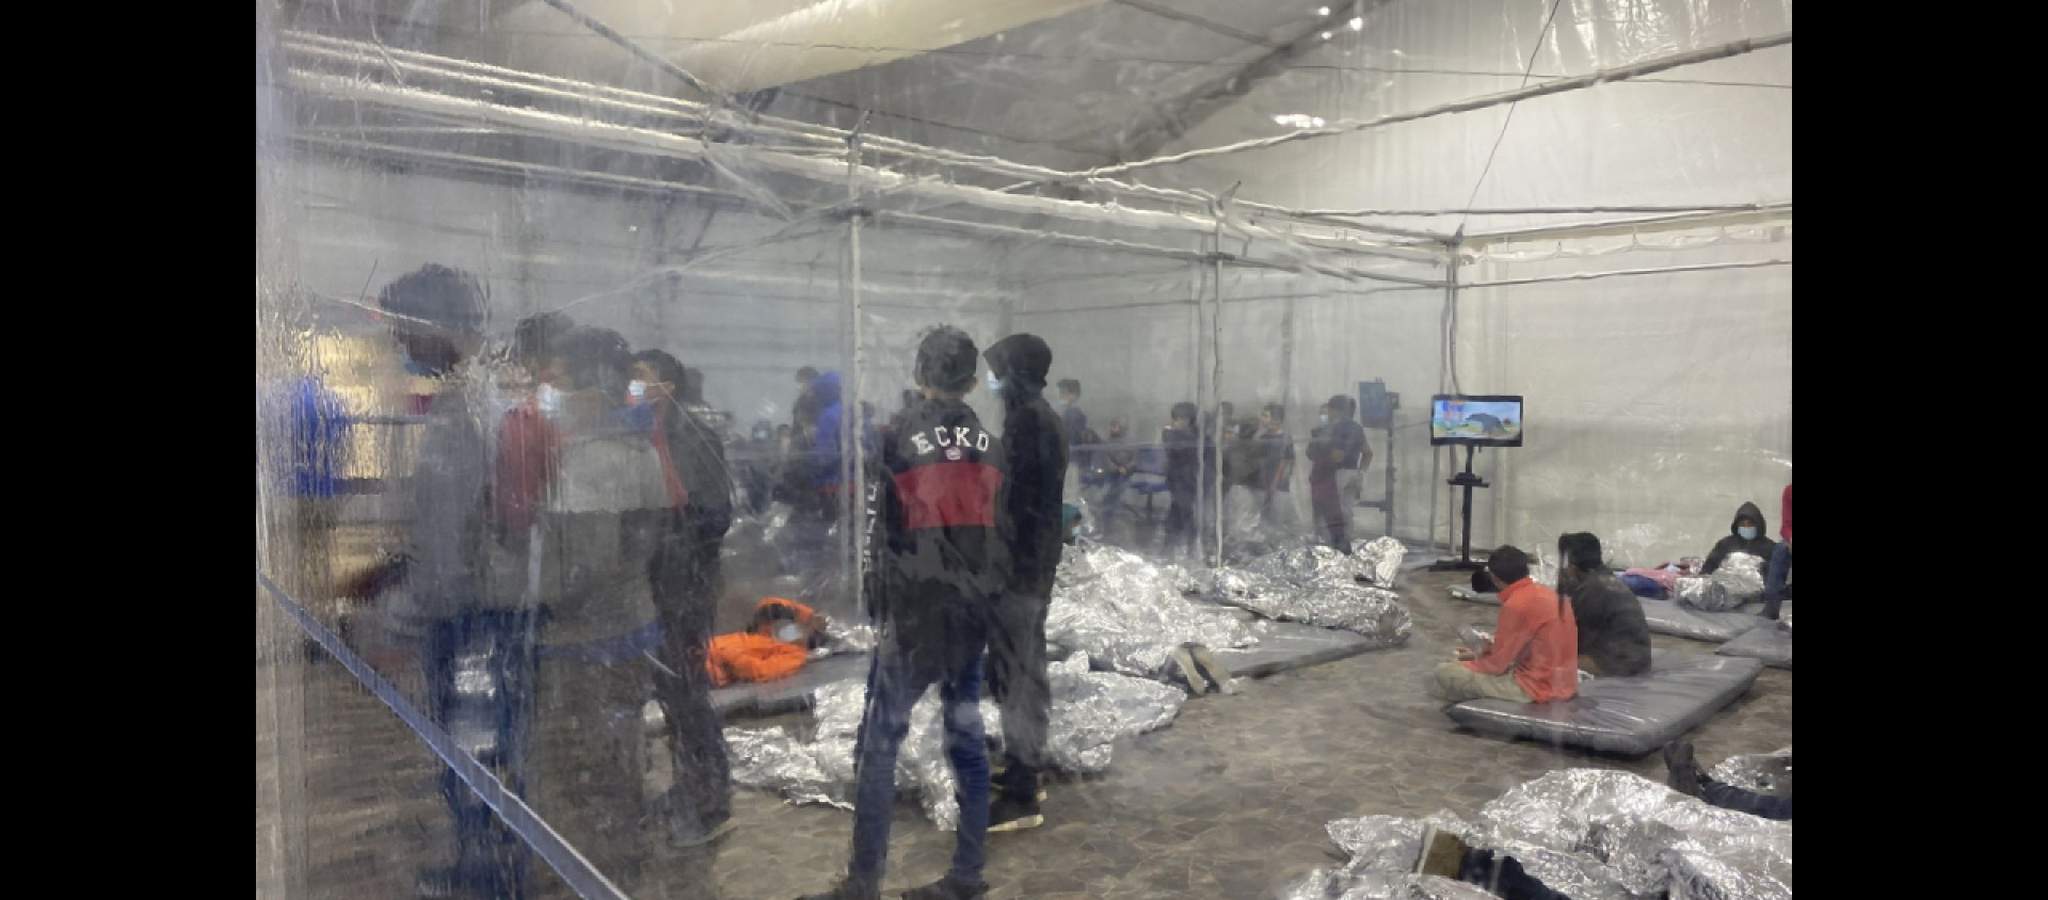 JBSA-Lackland asked to house unaccompanied migrant minors, Pentagon says